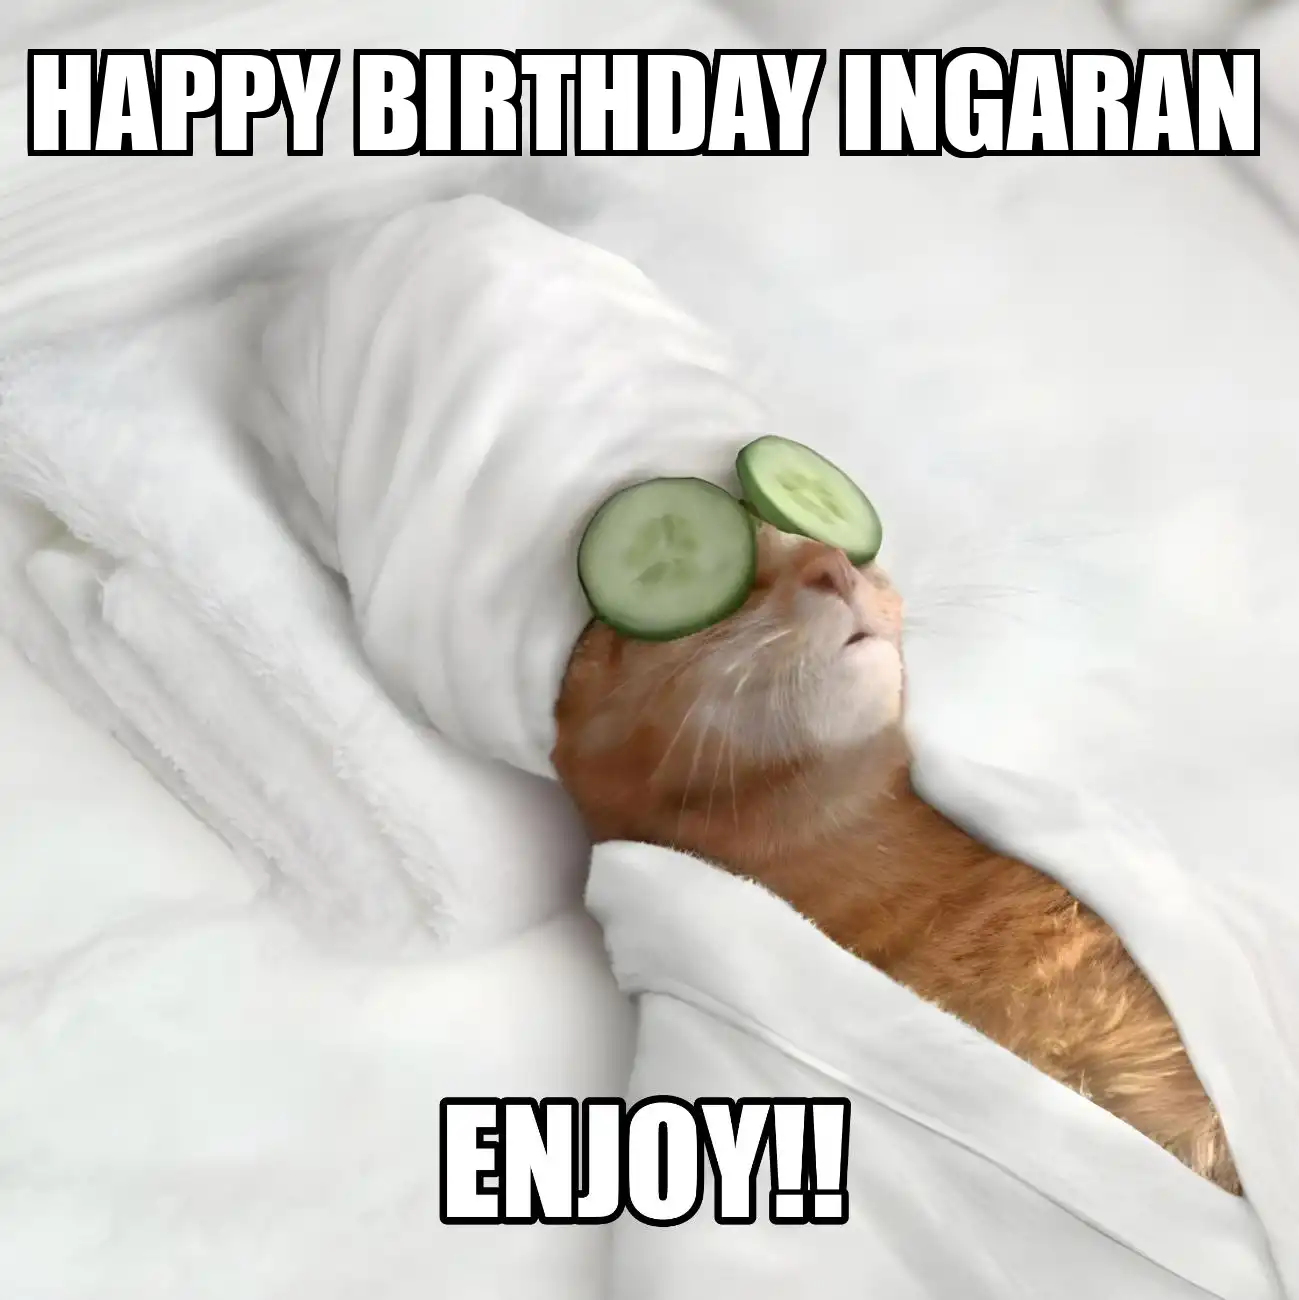 Happy Birthday Ingaran Enjoy Cat Meme